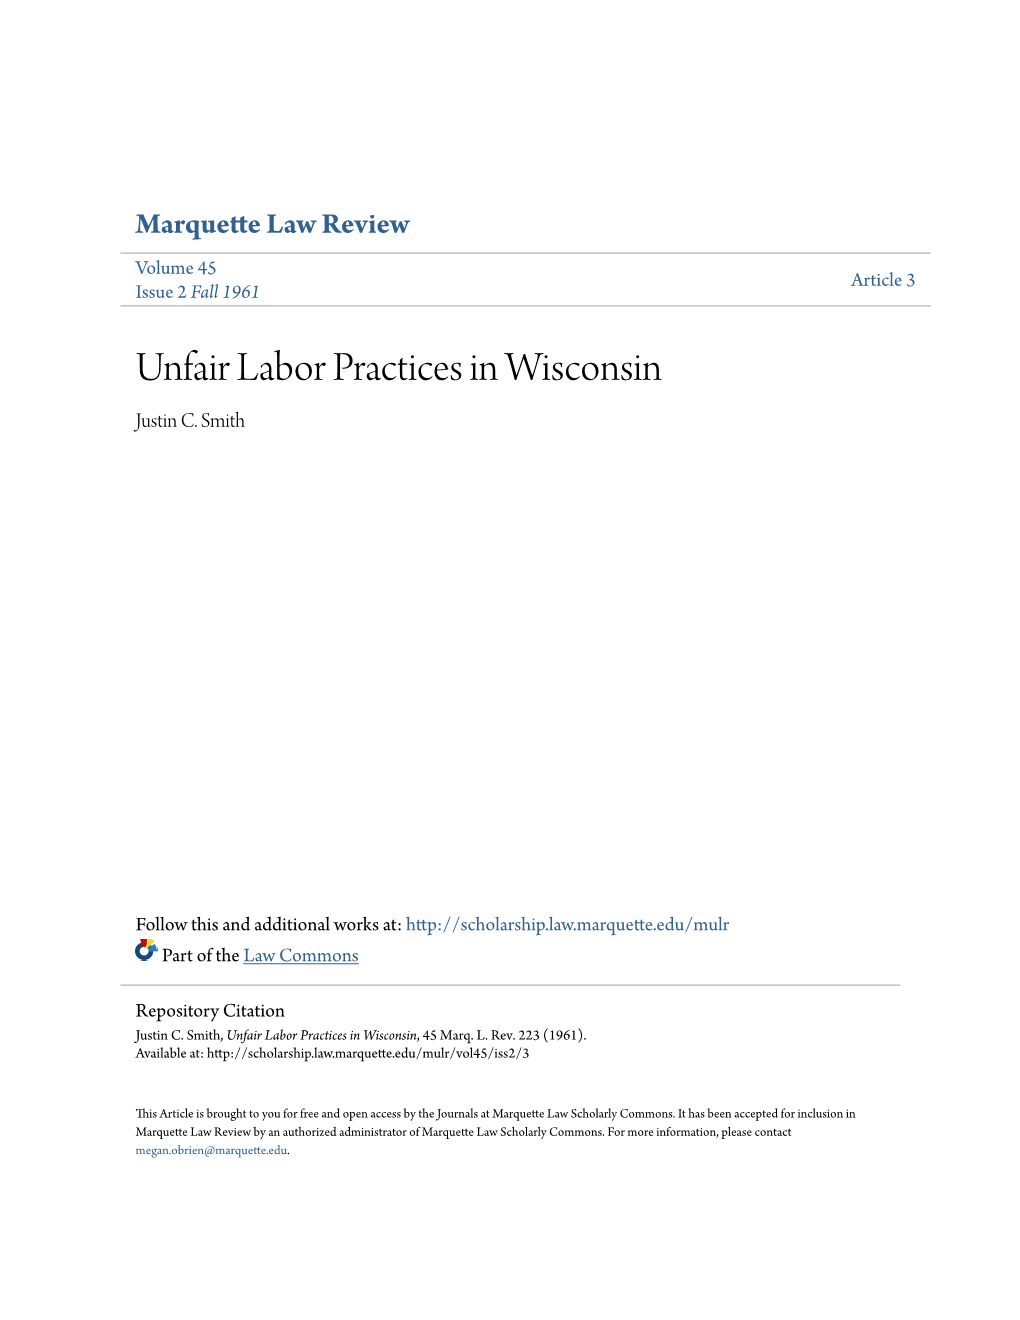 Unfair Labor Practices in Wisconsin Justin C